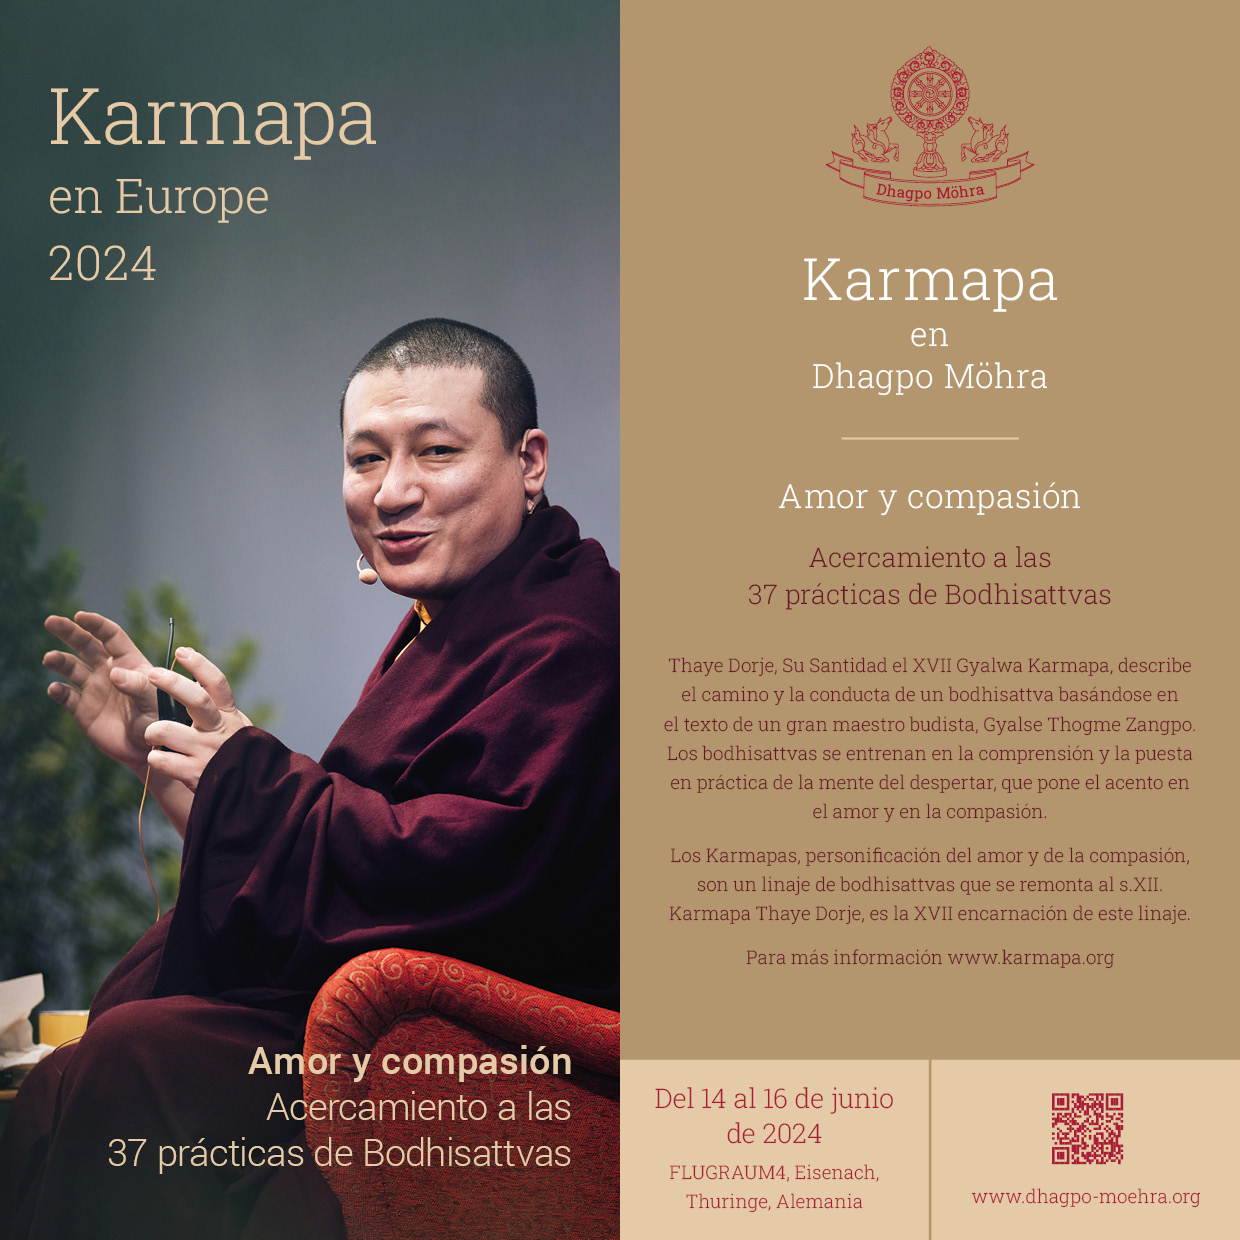 Karmapa en Dhagpo Mohra 2024